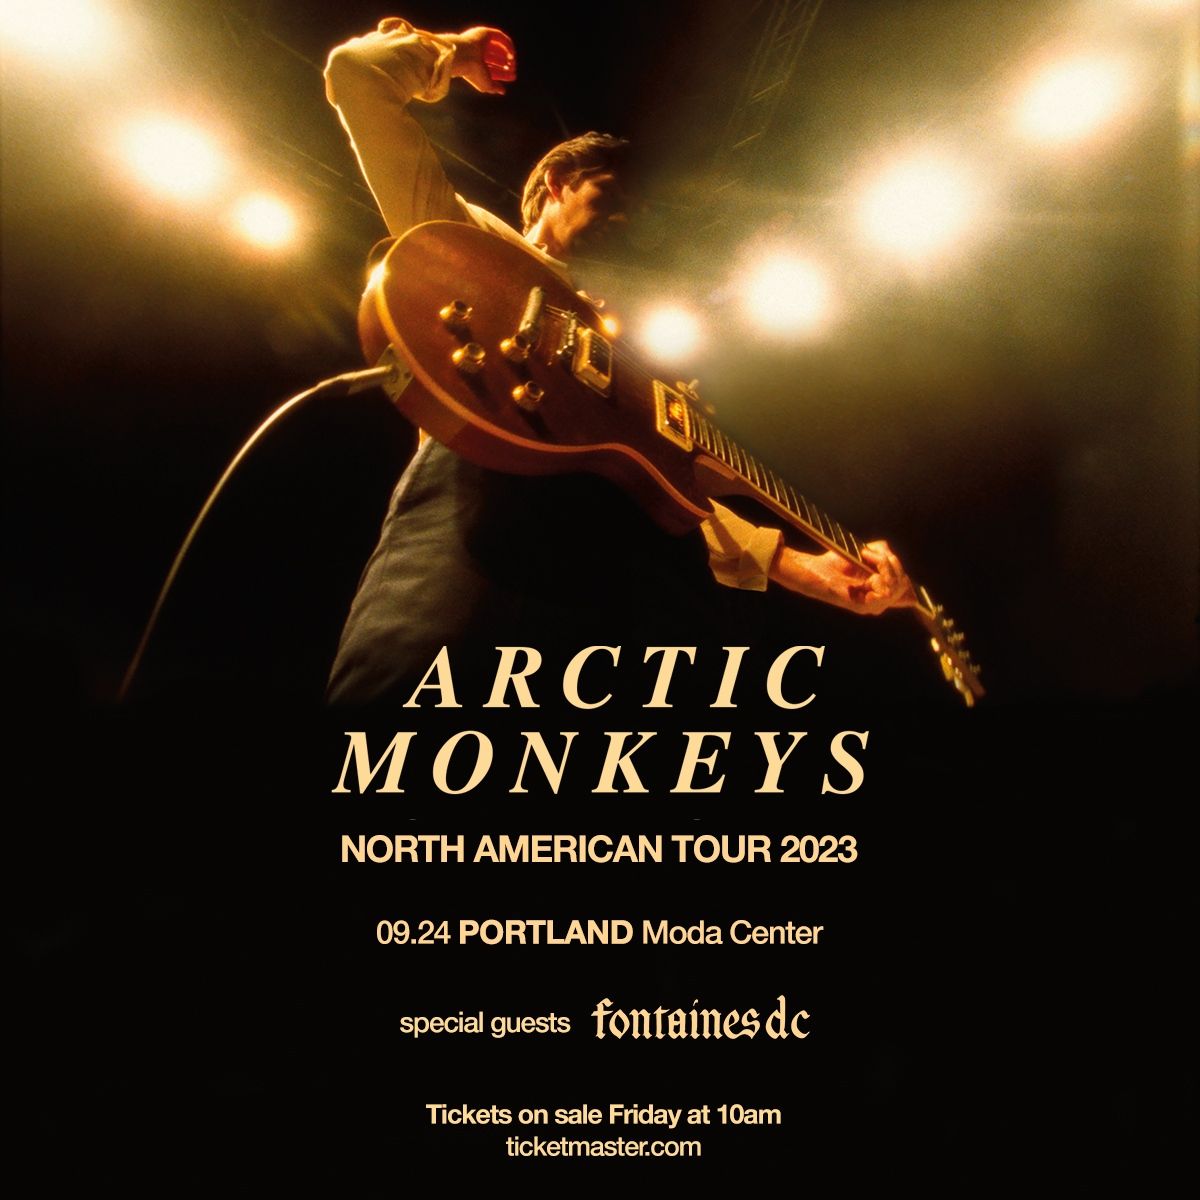 Arctic Monkeys at Moda Center in Portland, OR Sunday, September 24